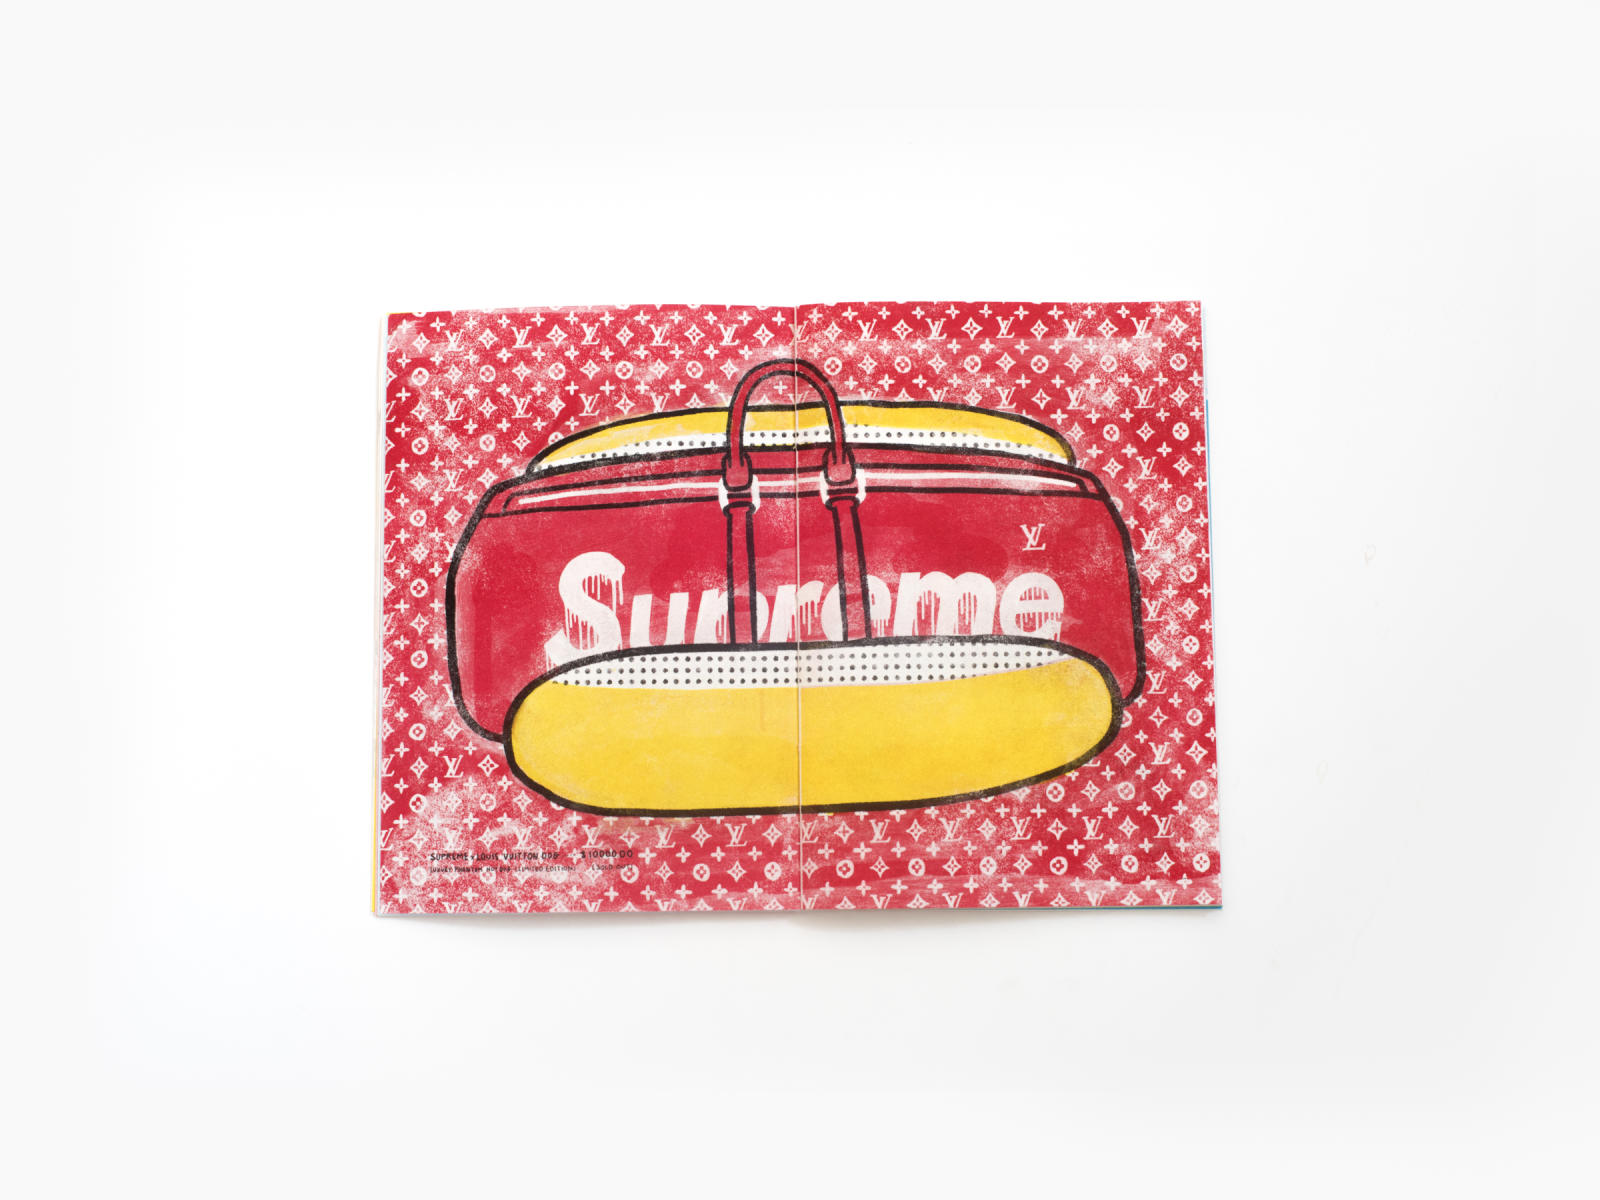 Supreme x Vuitton bag graphics printed by Risograph